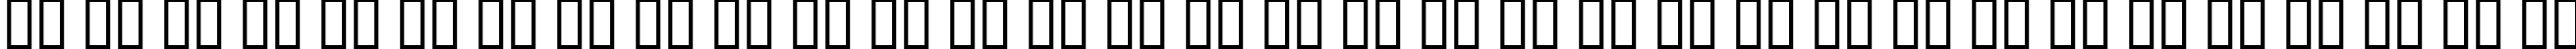 Пример написания русского алфавита шрифтом BOOTLE